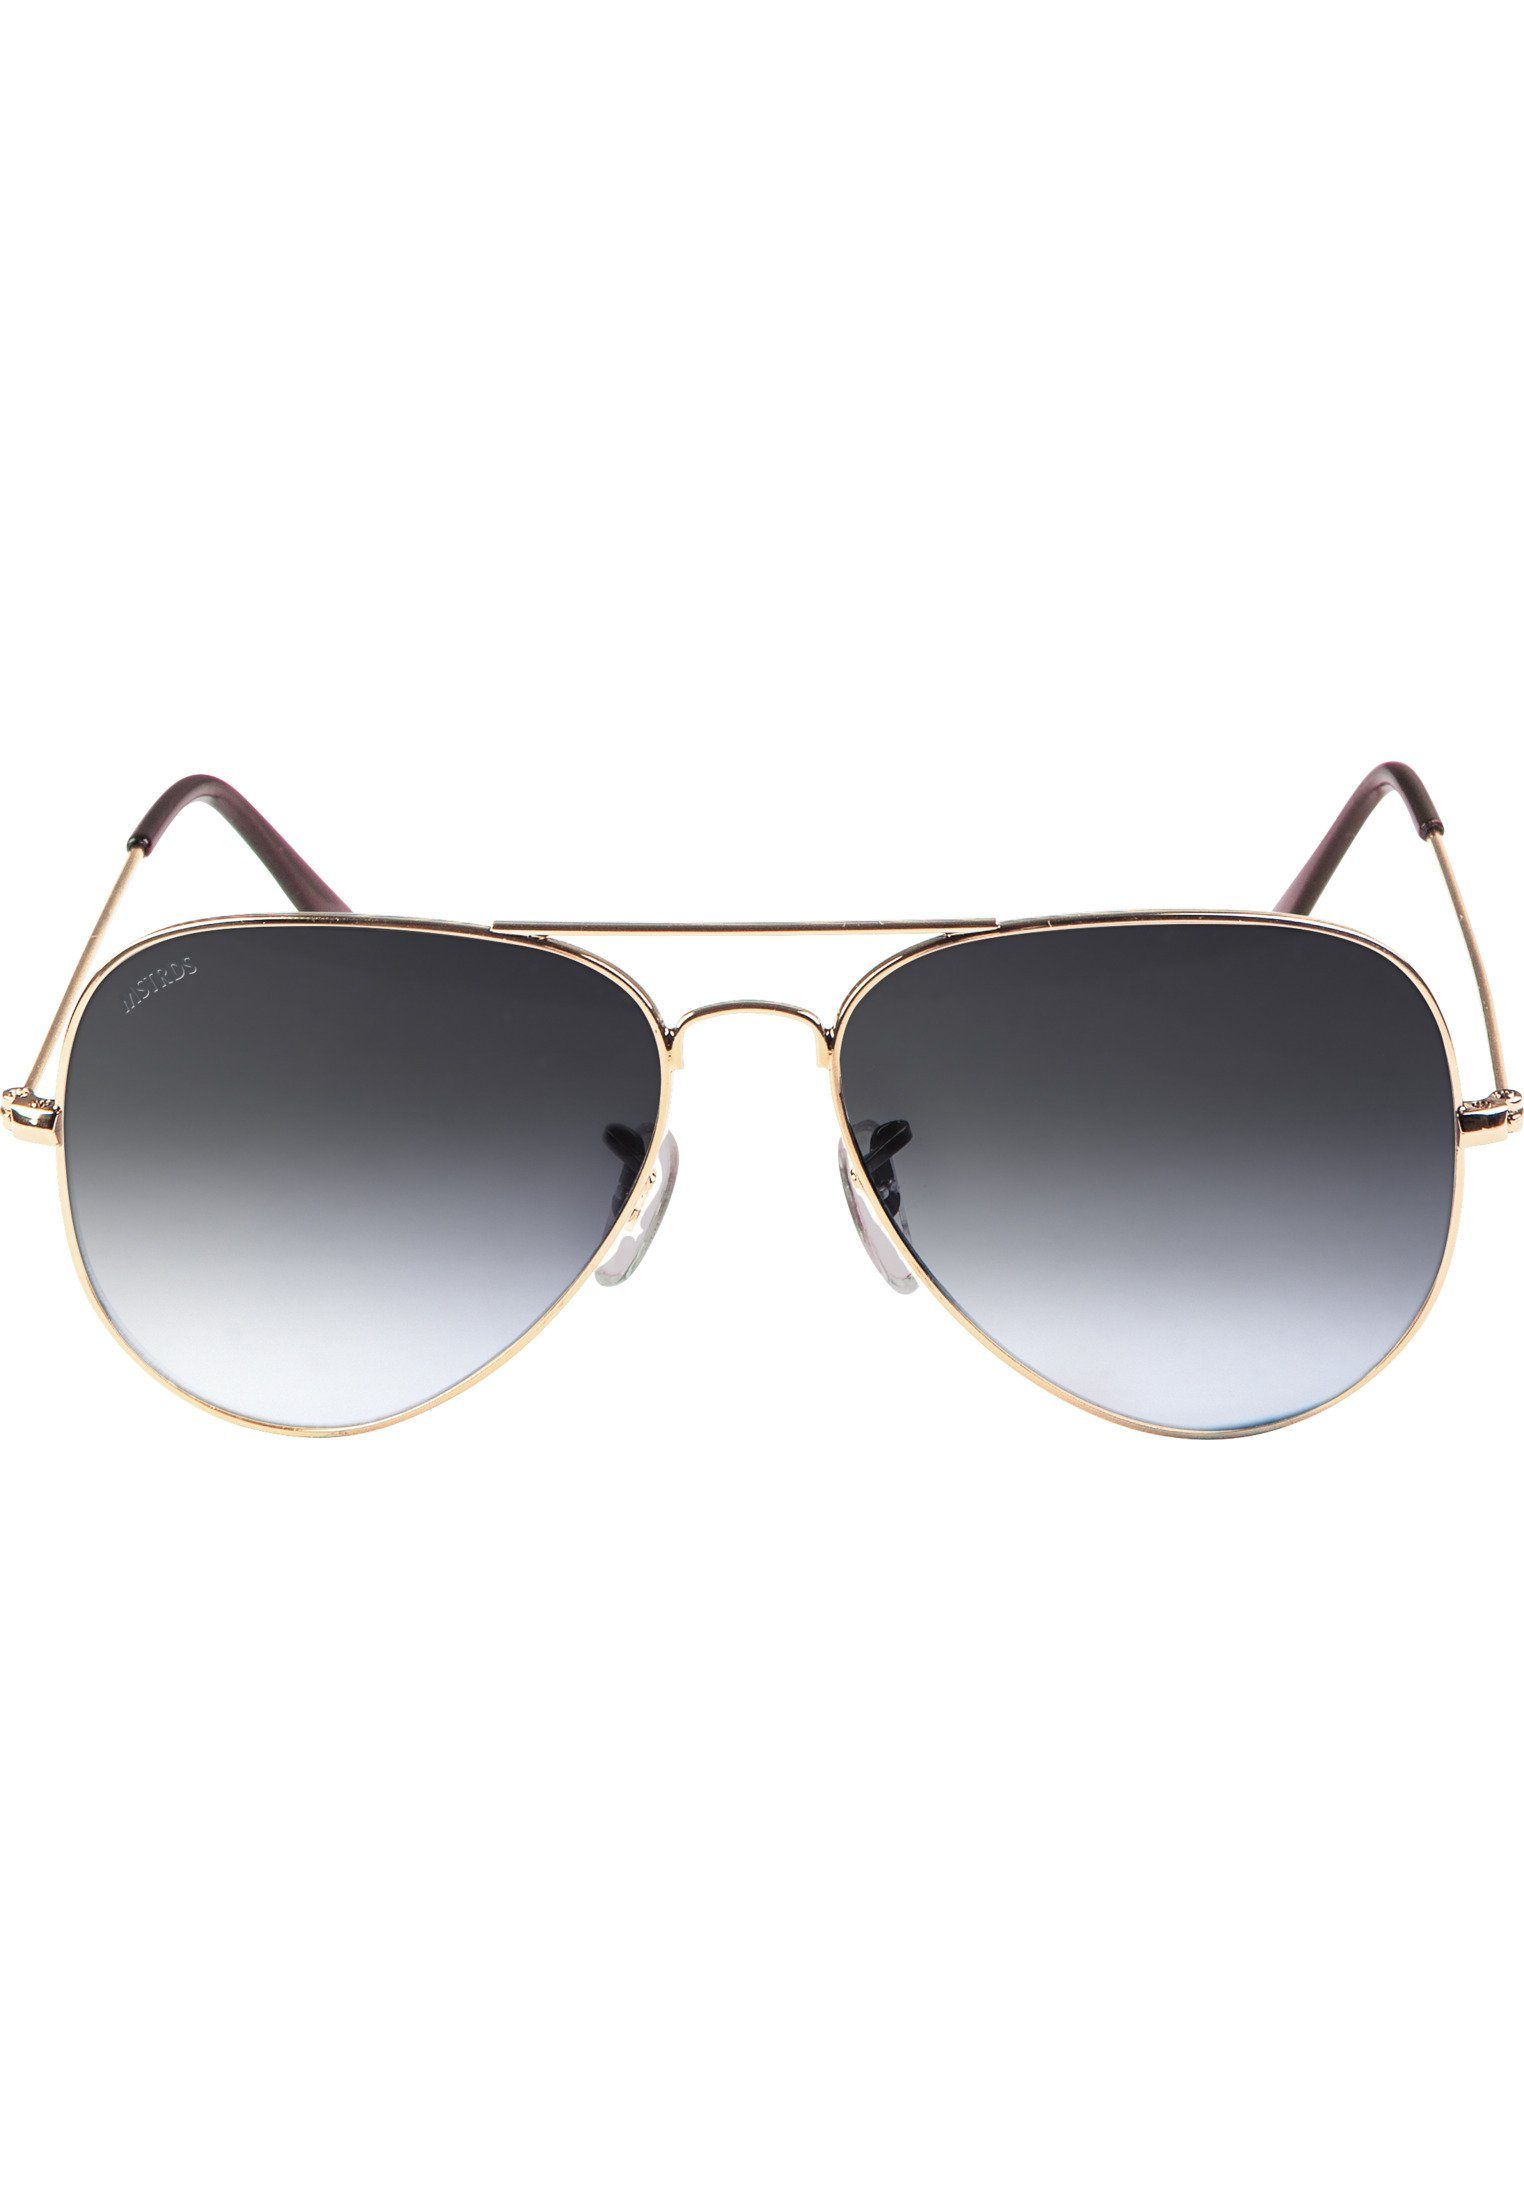 MSTRDS Sonnenbrille Accessoires Sunglasses PureAv gold/grey | Sonnenbrillen